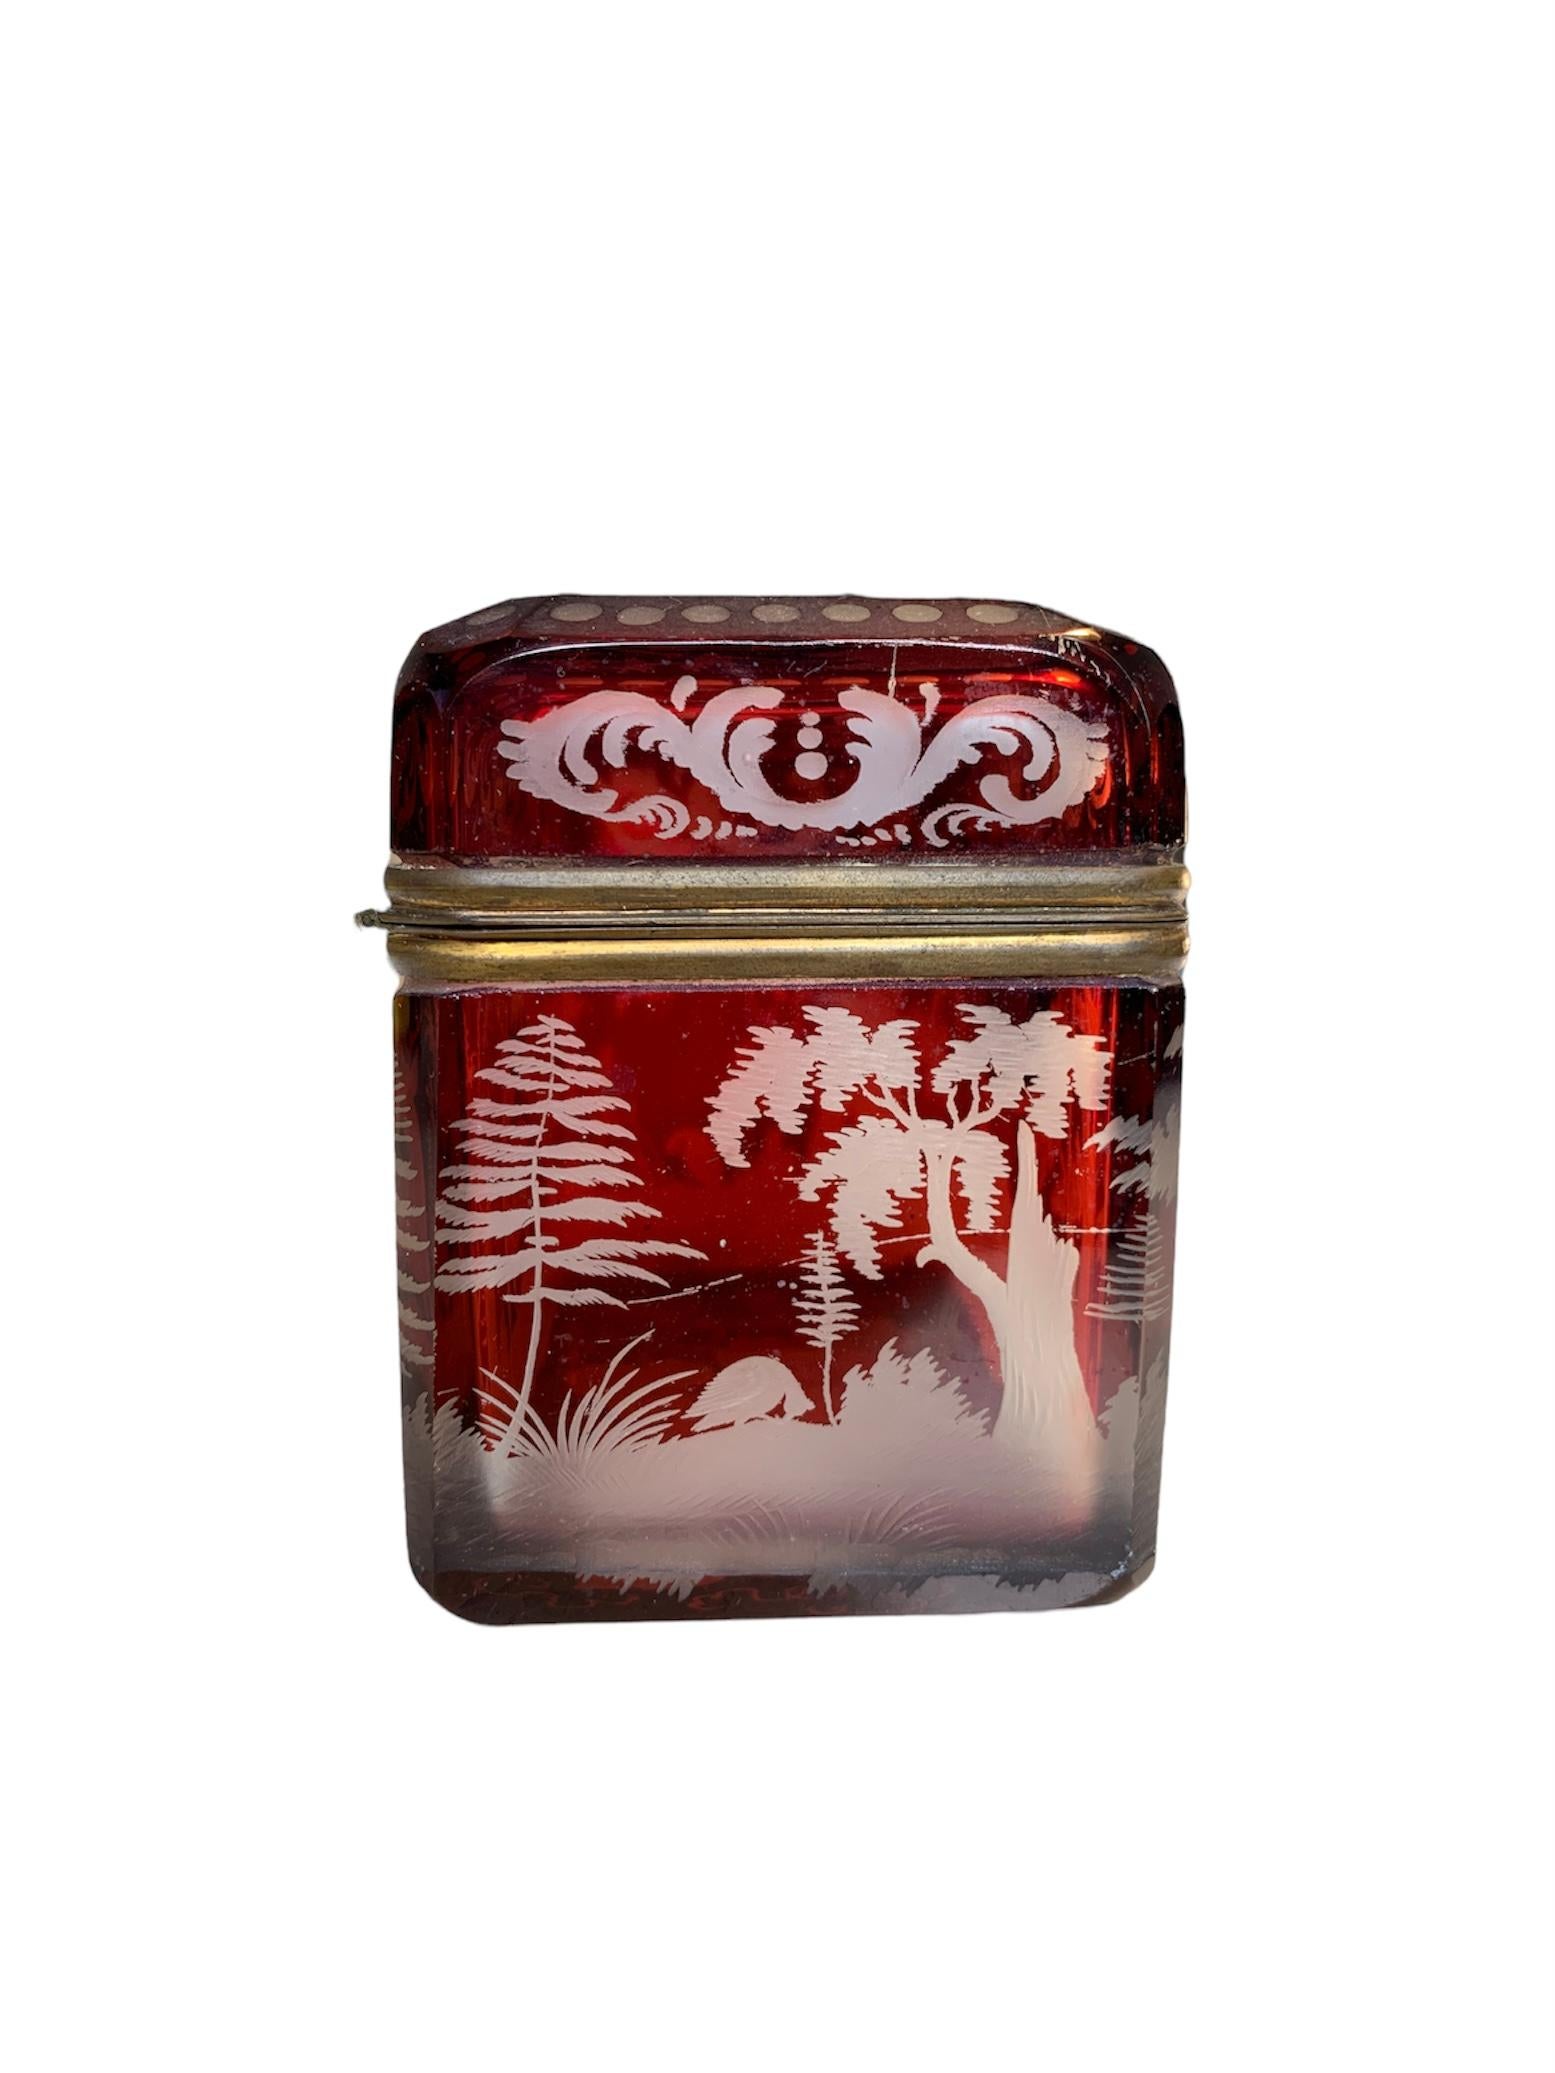 European Antique 19th Century Ruby Bohemian Crystal Glass Jewel Casket Box